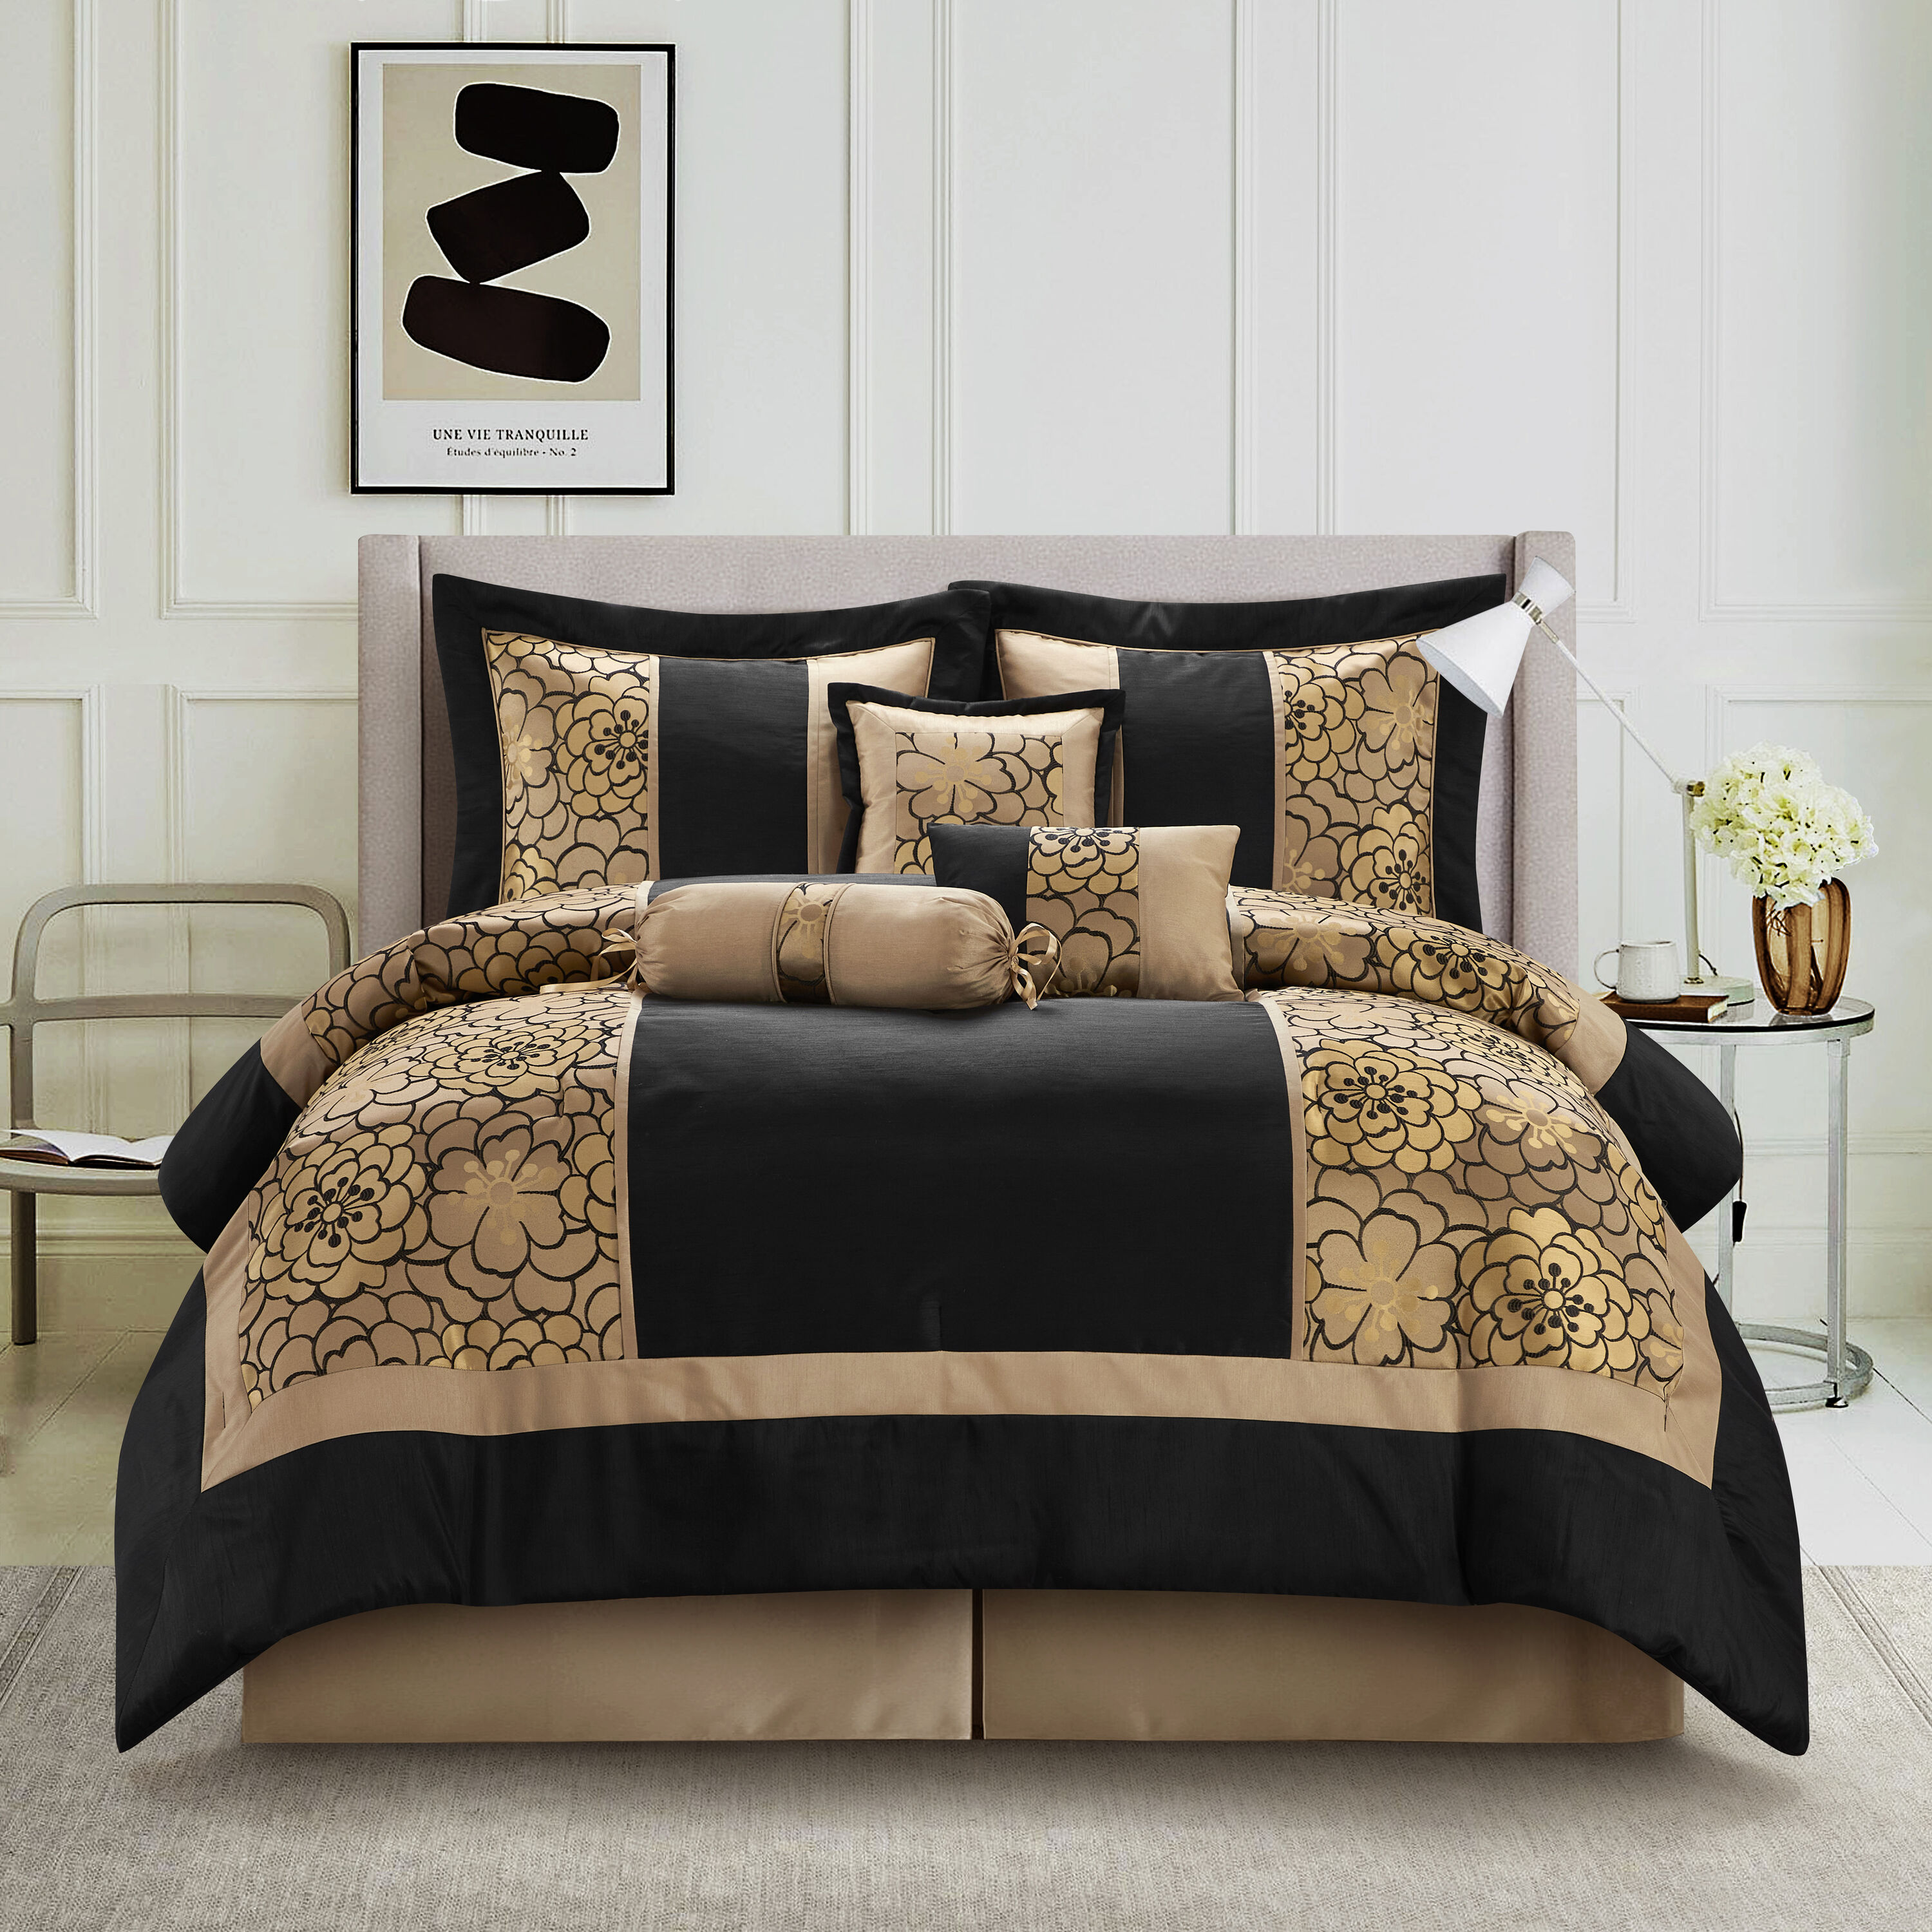 Grand Avenue Sibyl 7-Piece Black/Gold Queen Comforter Set in the